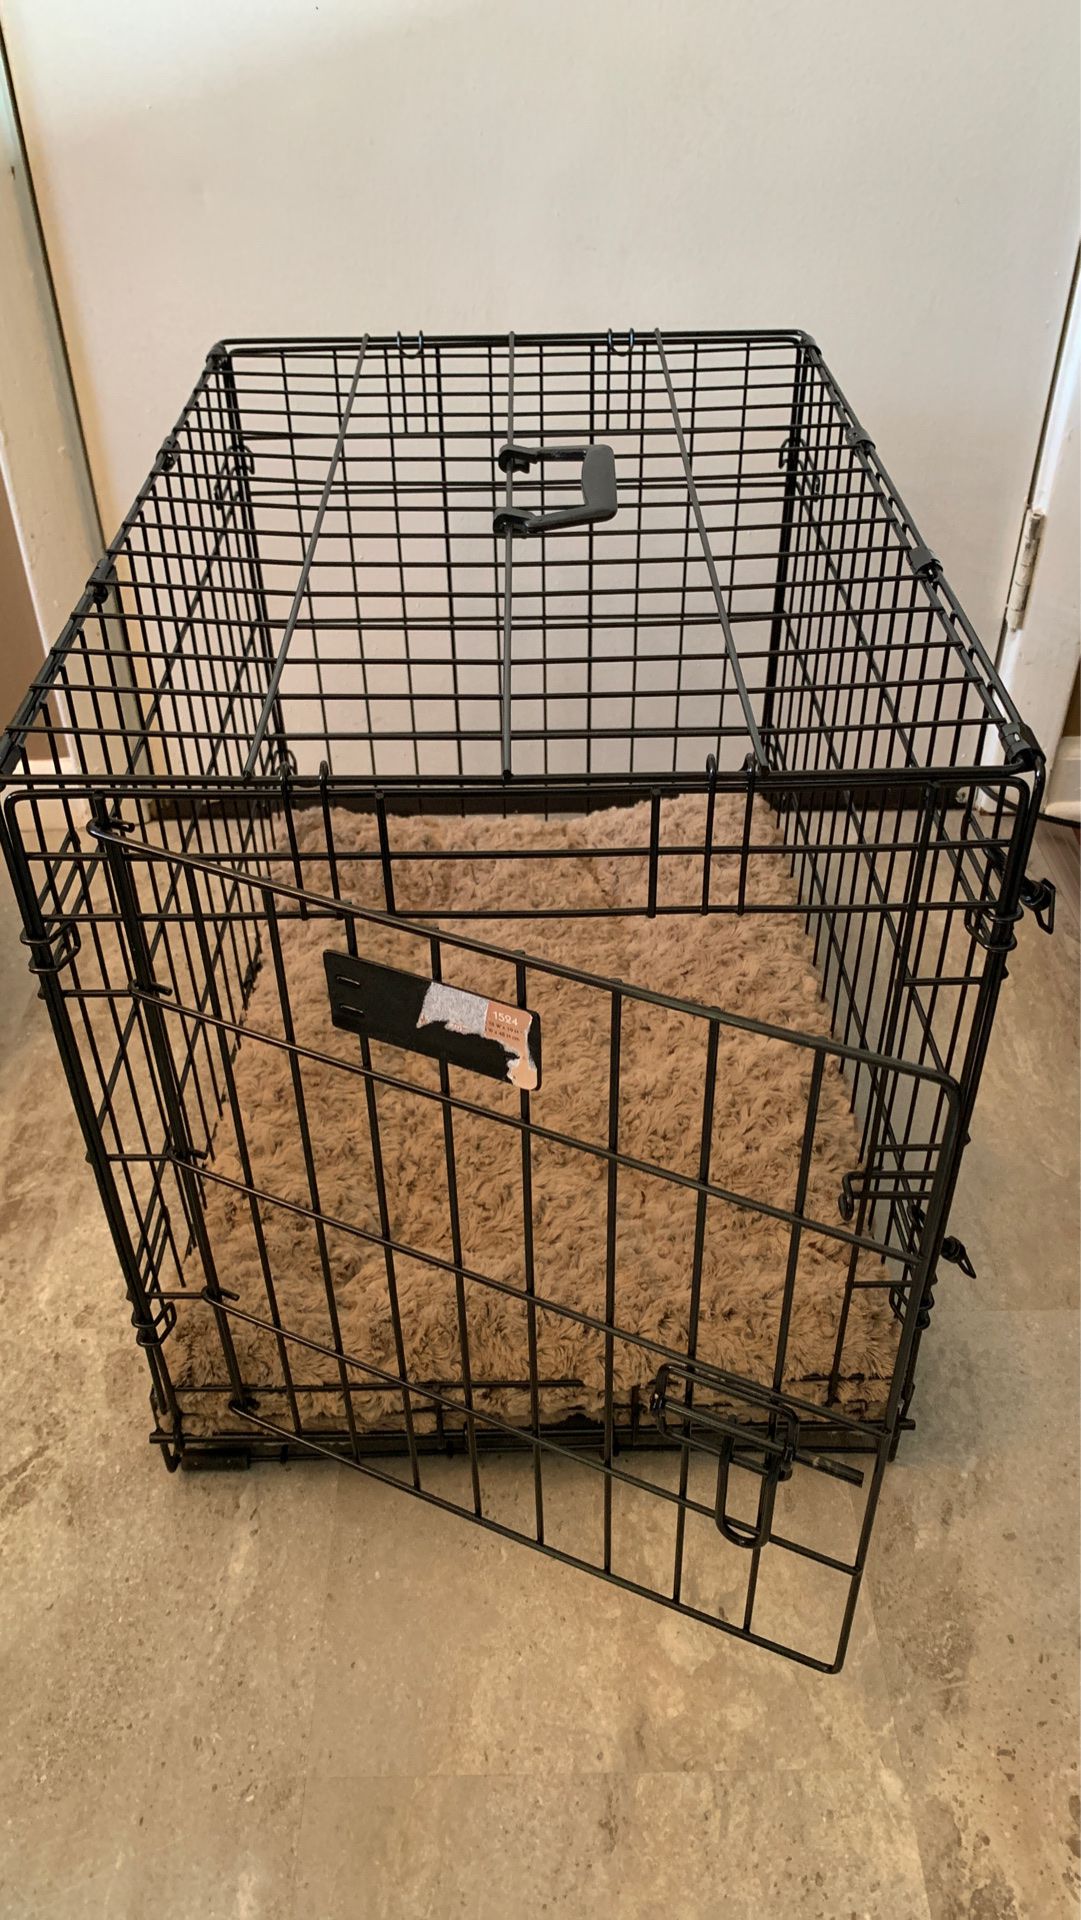 Small/Medium Dog Crate Kennel